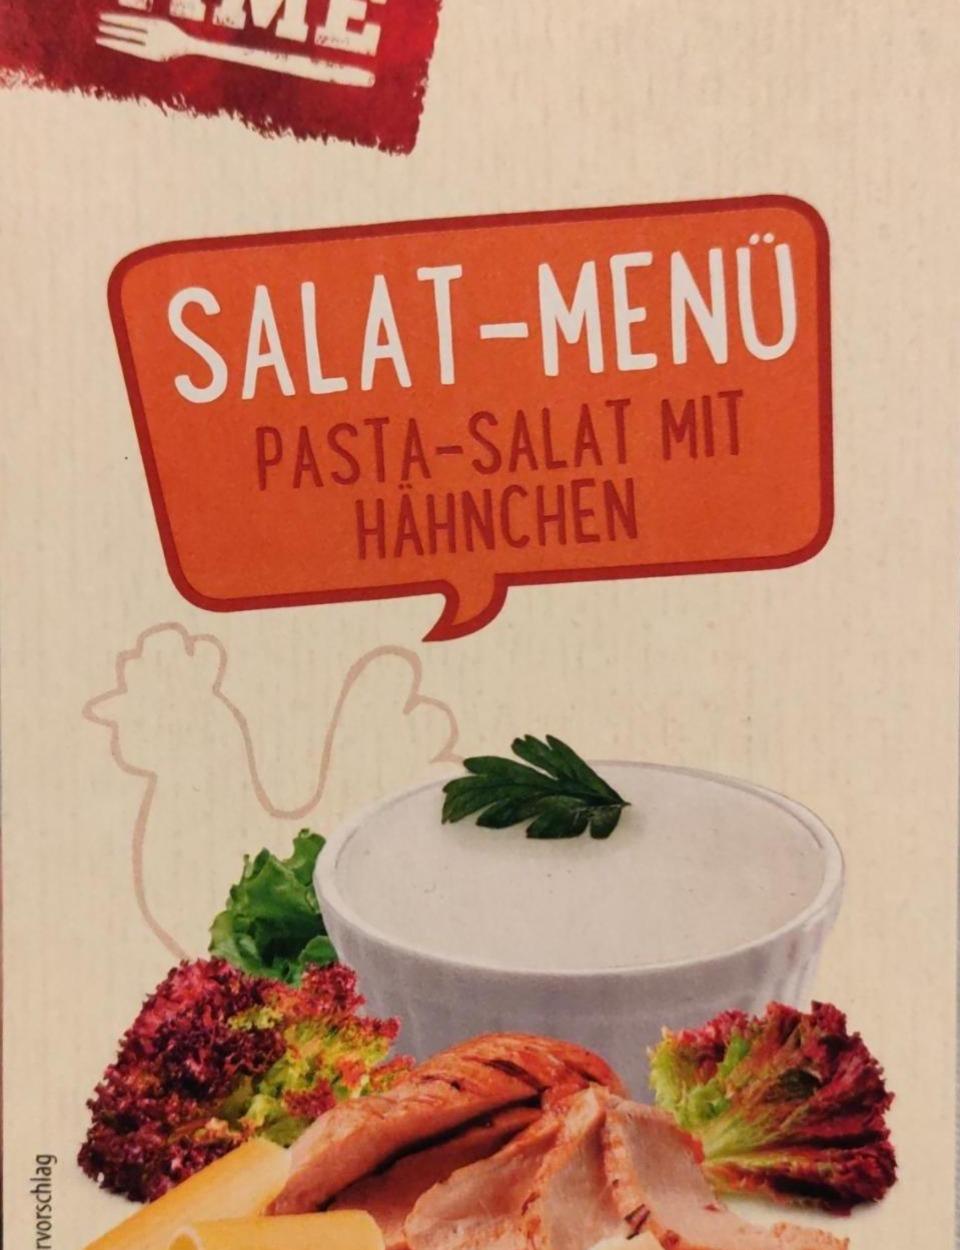 Fotografie - Salat-menü pasta-salat mit hähnchen Snack time